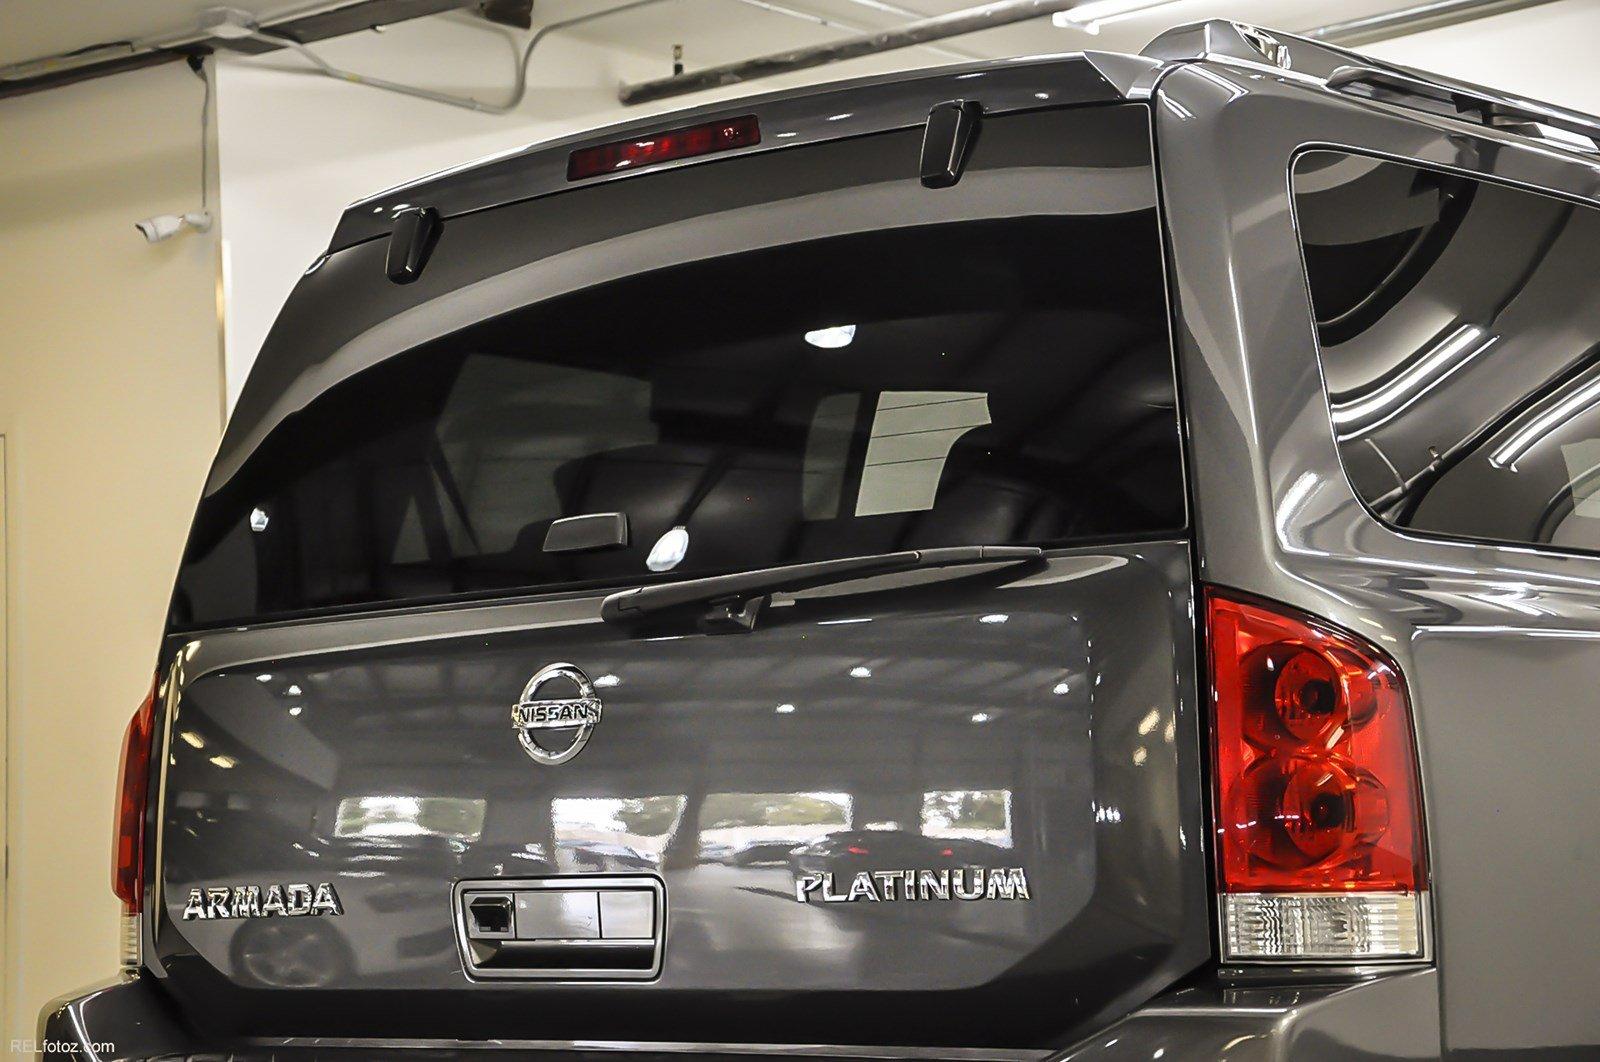 Used 2012 Nissan Armada Platinum for sale Sold at Gravity Autos Marietta in Marietta GA 30060 7